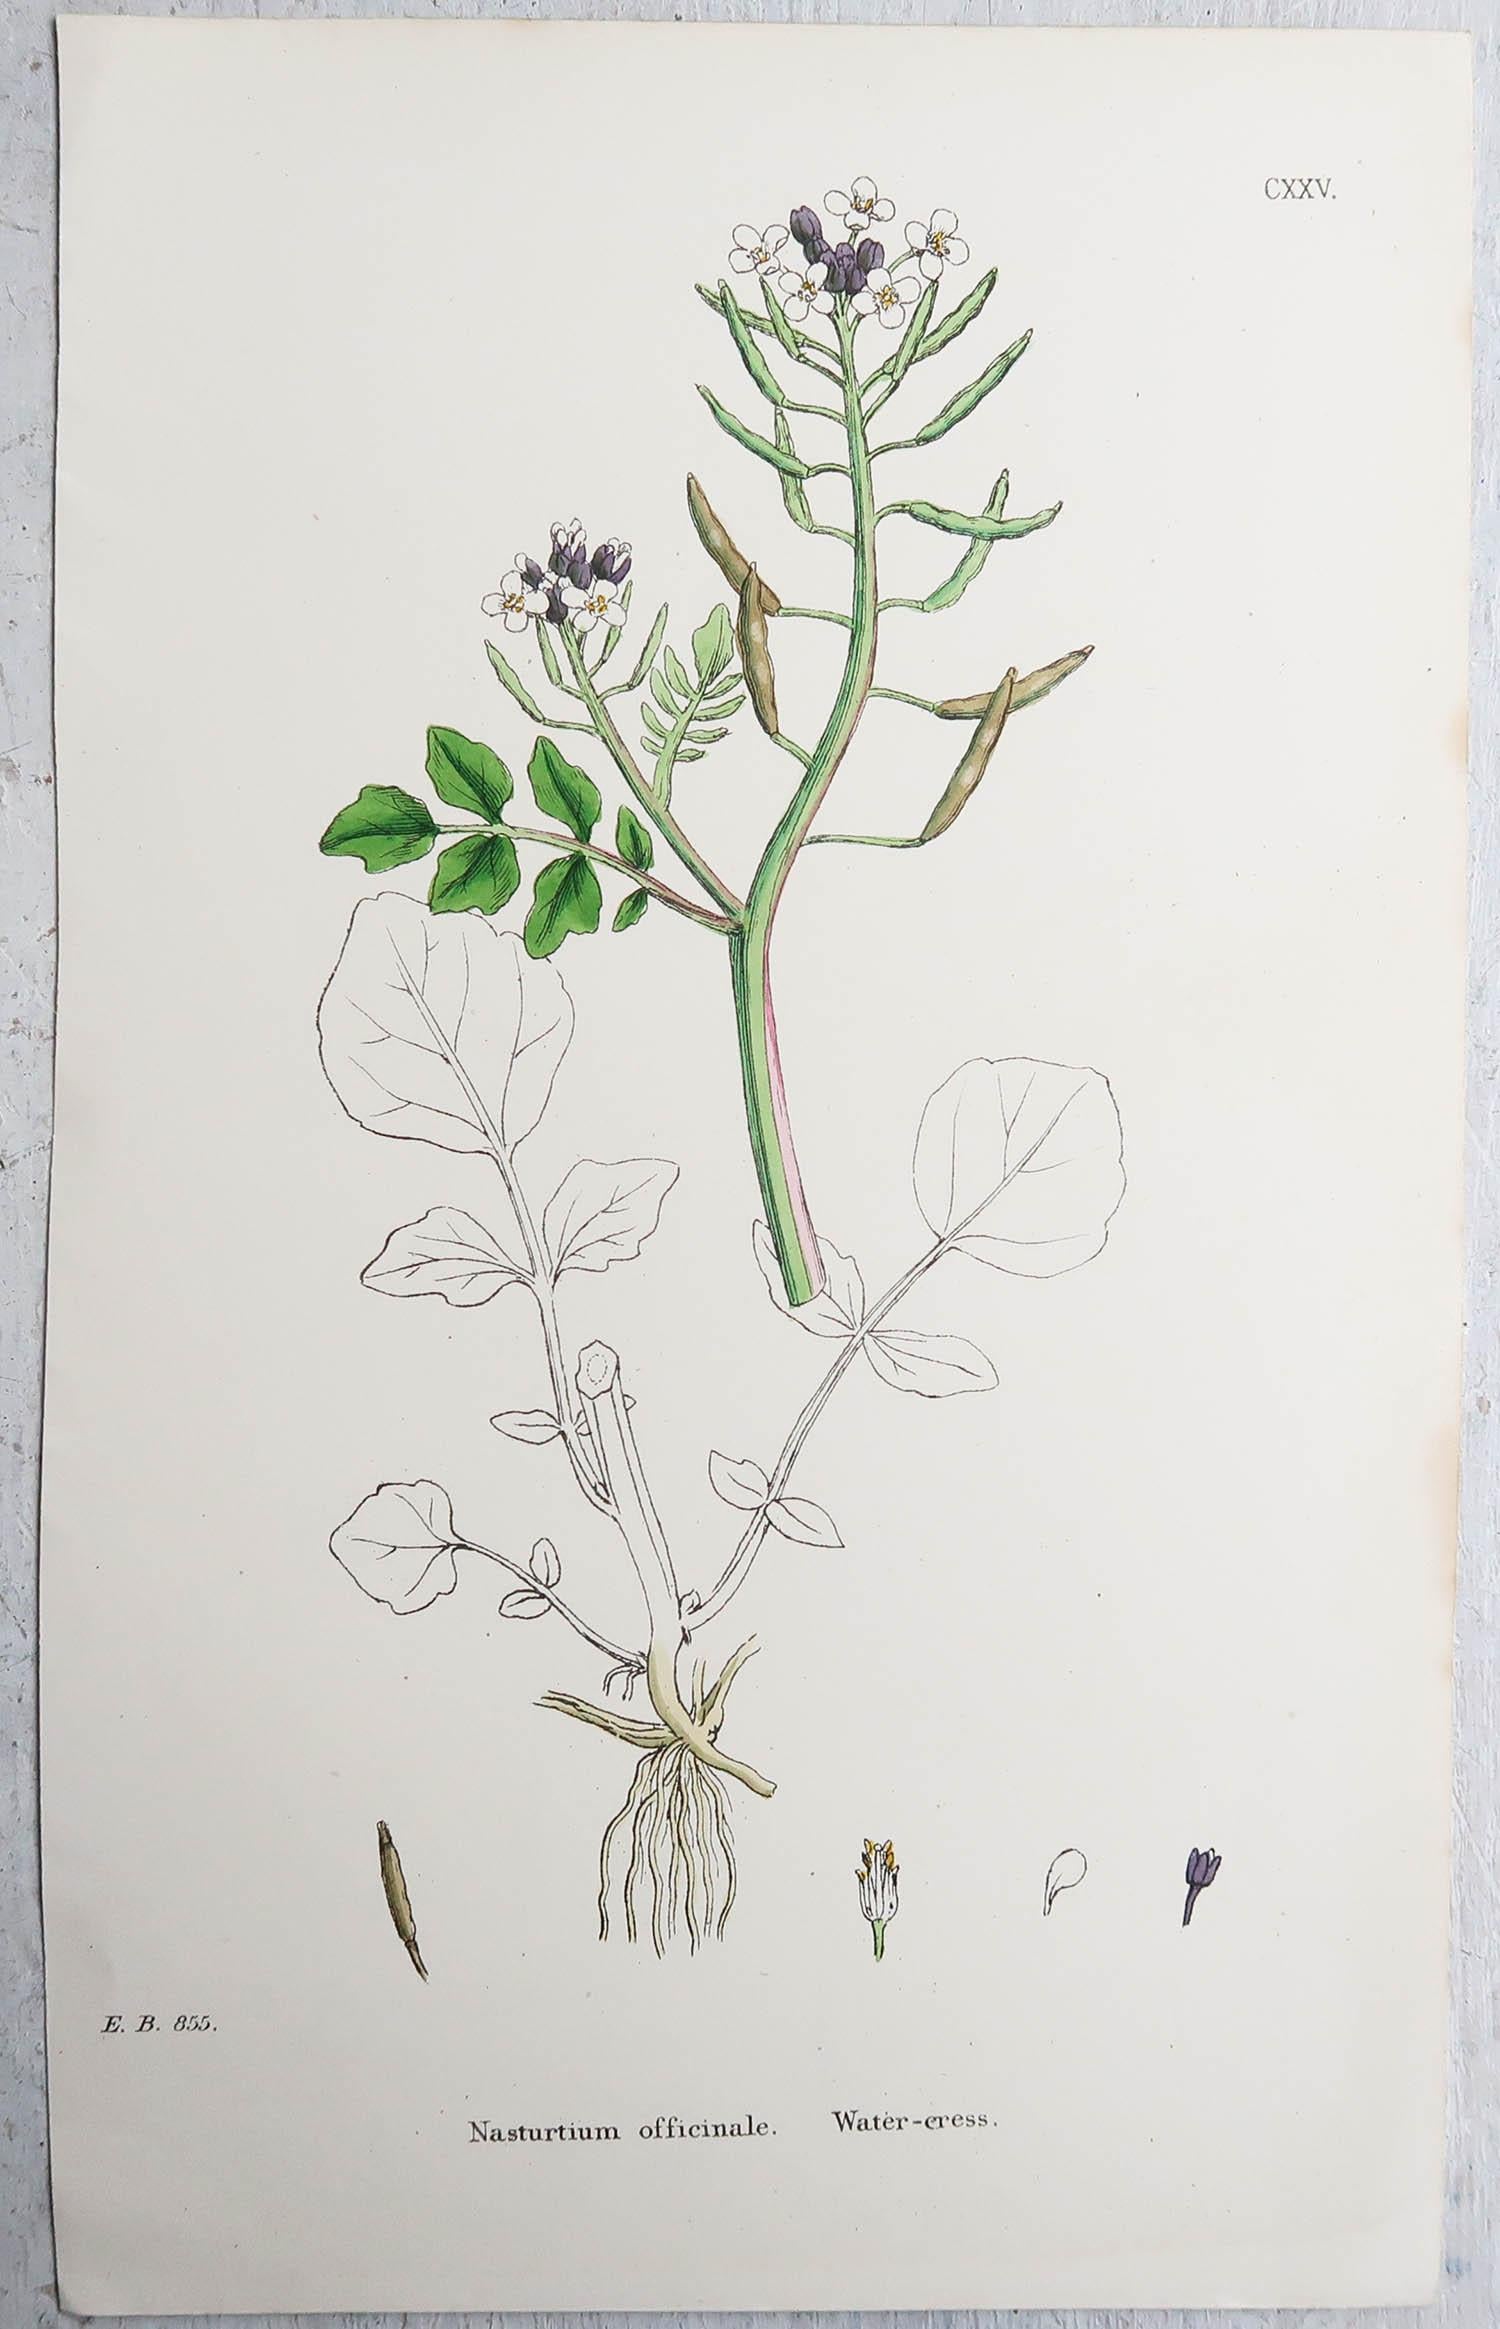 Paper Set of 15 Original Antique Botanical Prints - Vegetables. Circa 1850